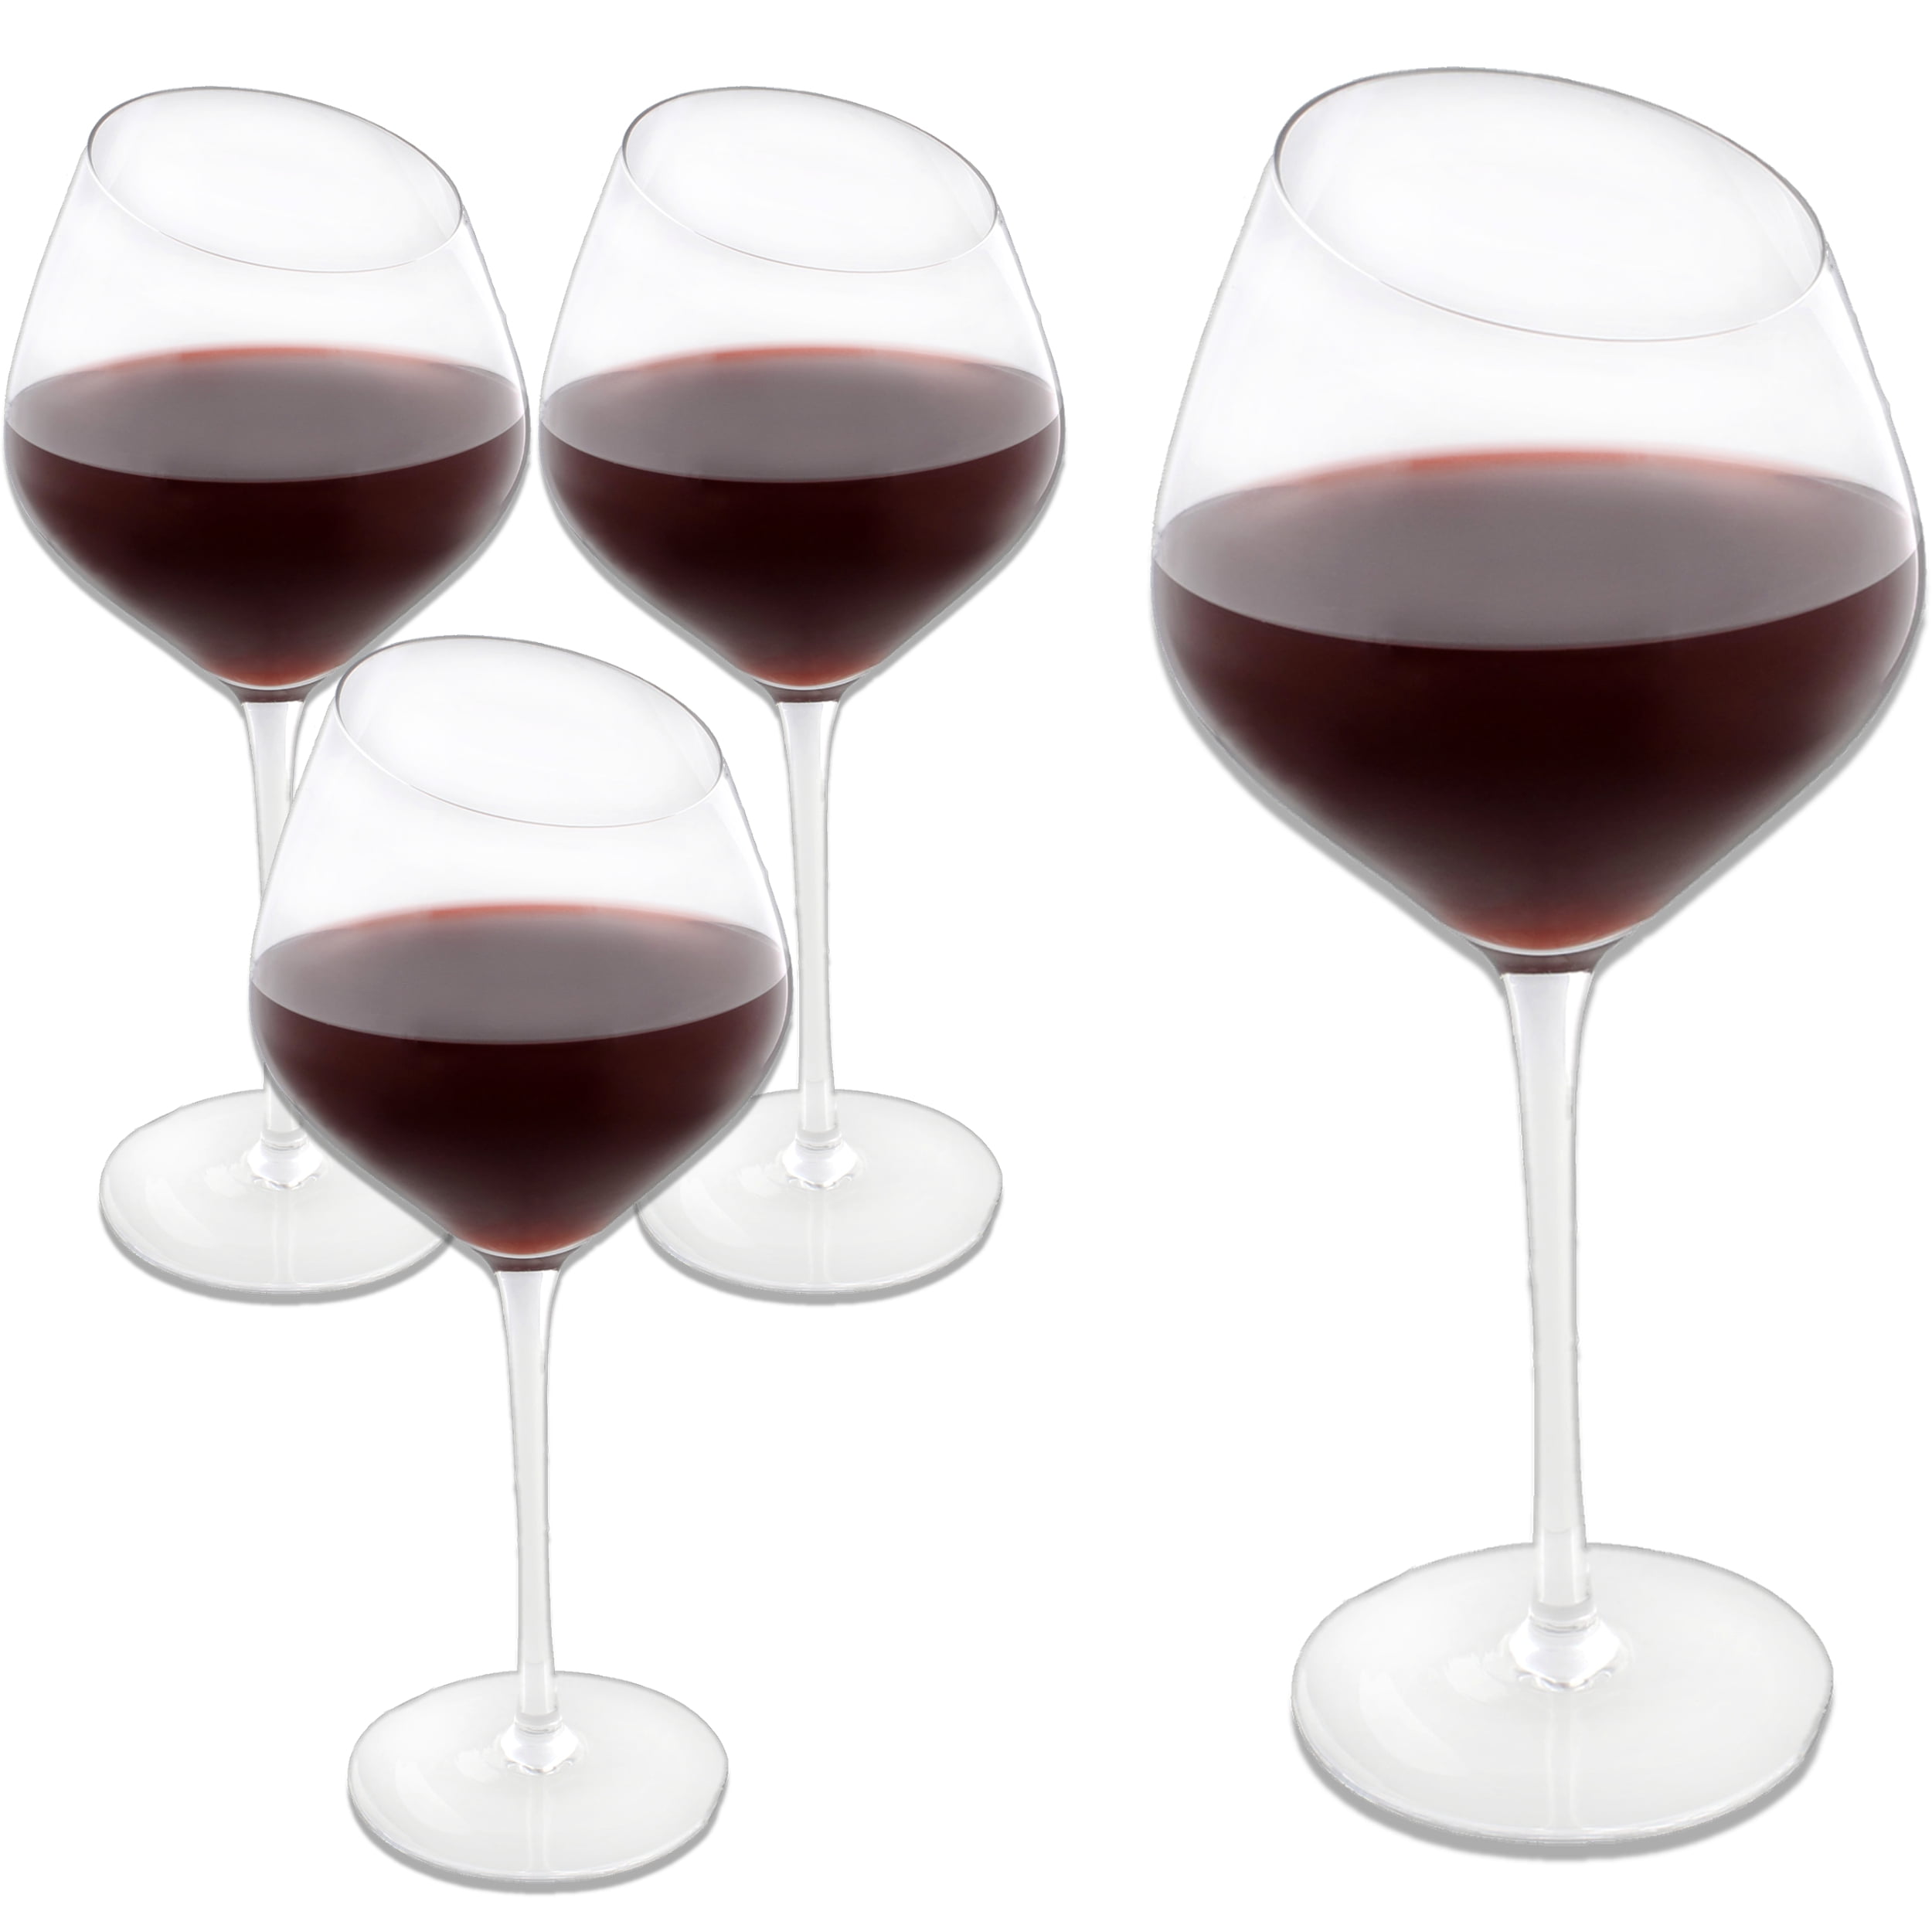 G Francis Large 'Red Wine' Glasses Set of 4 - Slant Rim Wine Glass with Stem